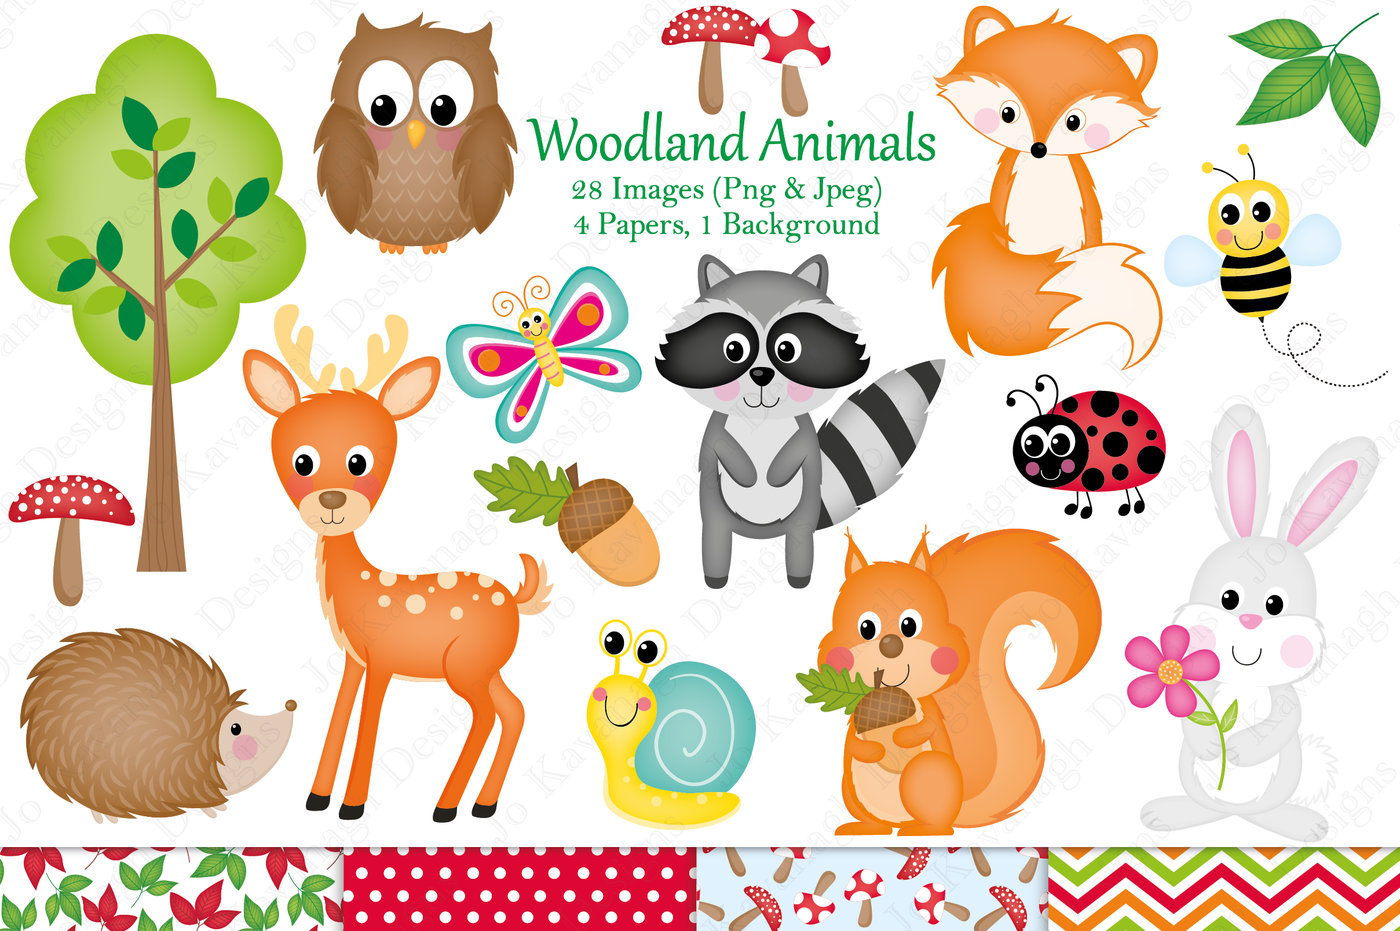 Woodland animals clipart,Woodland animal graphics.